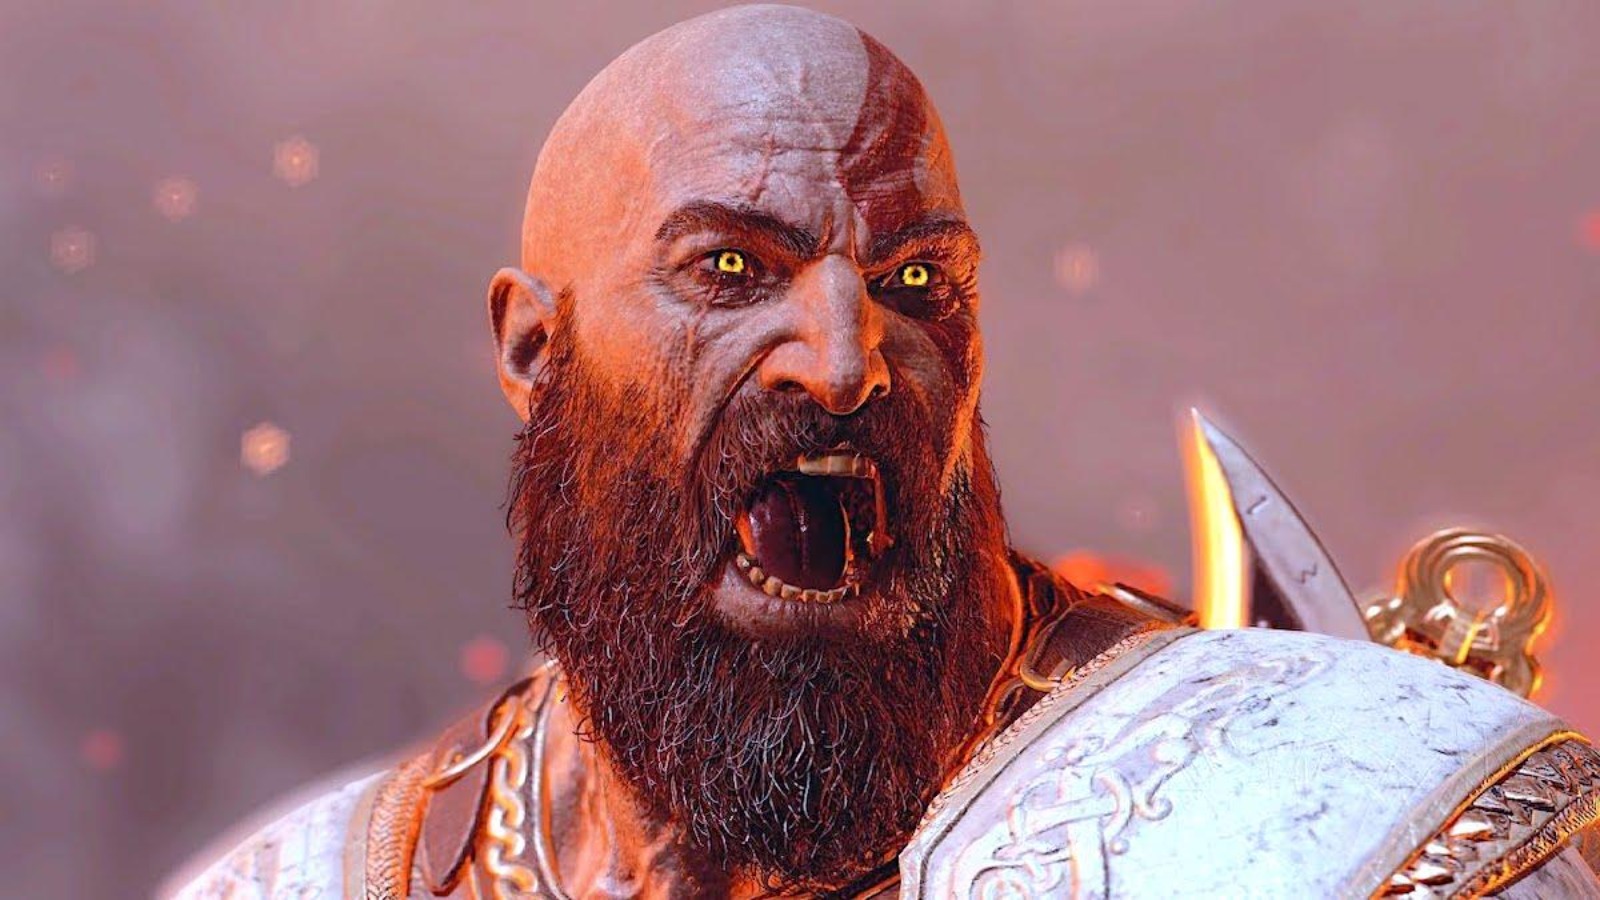 God of War Ragnarok Trailer Reveals Kratos and Atreus' Next Adventure